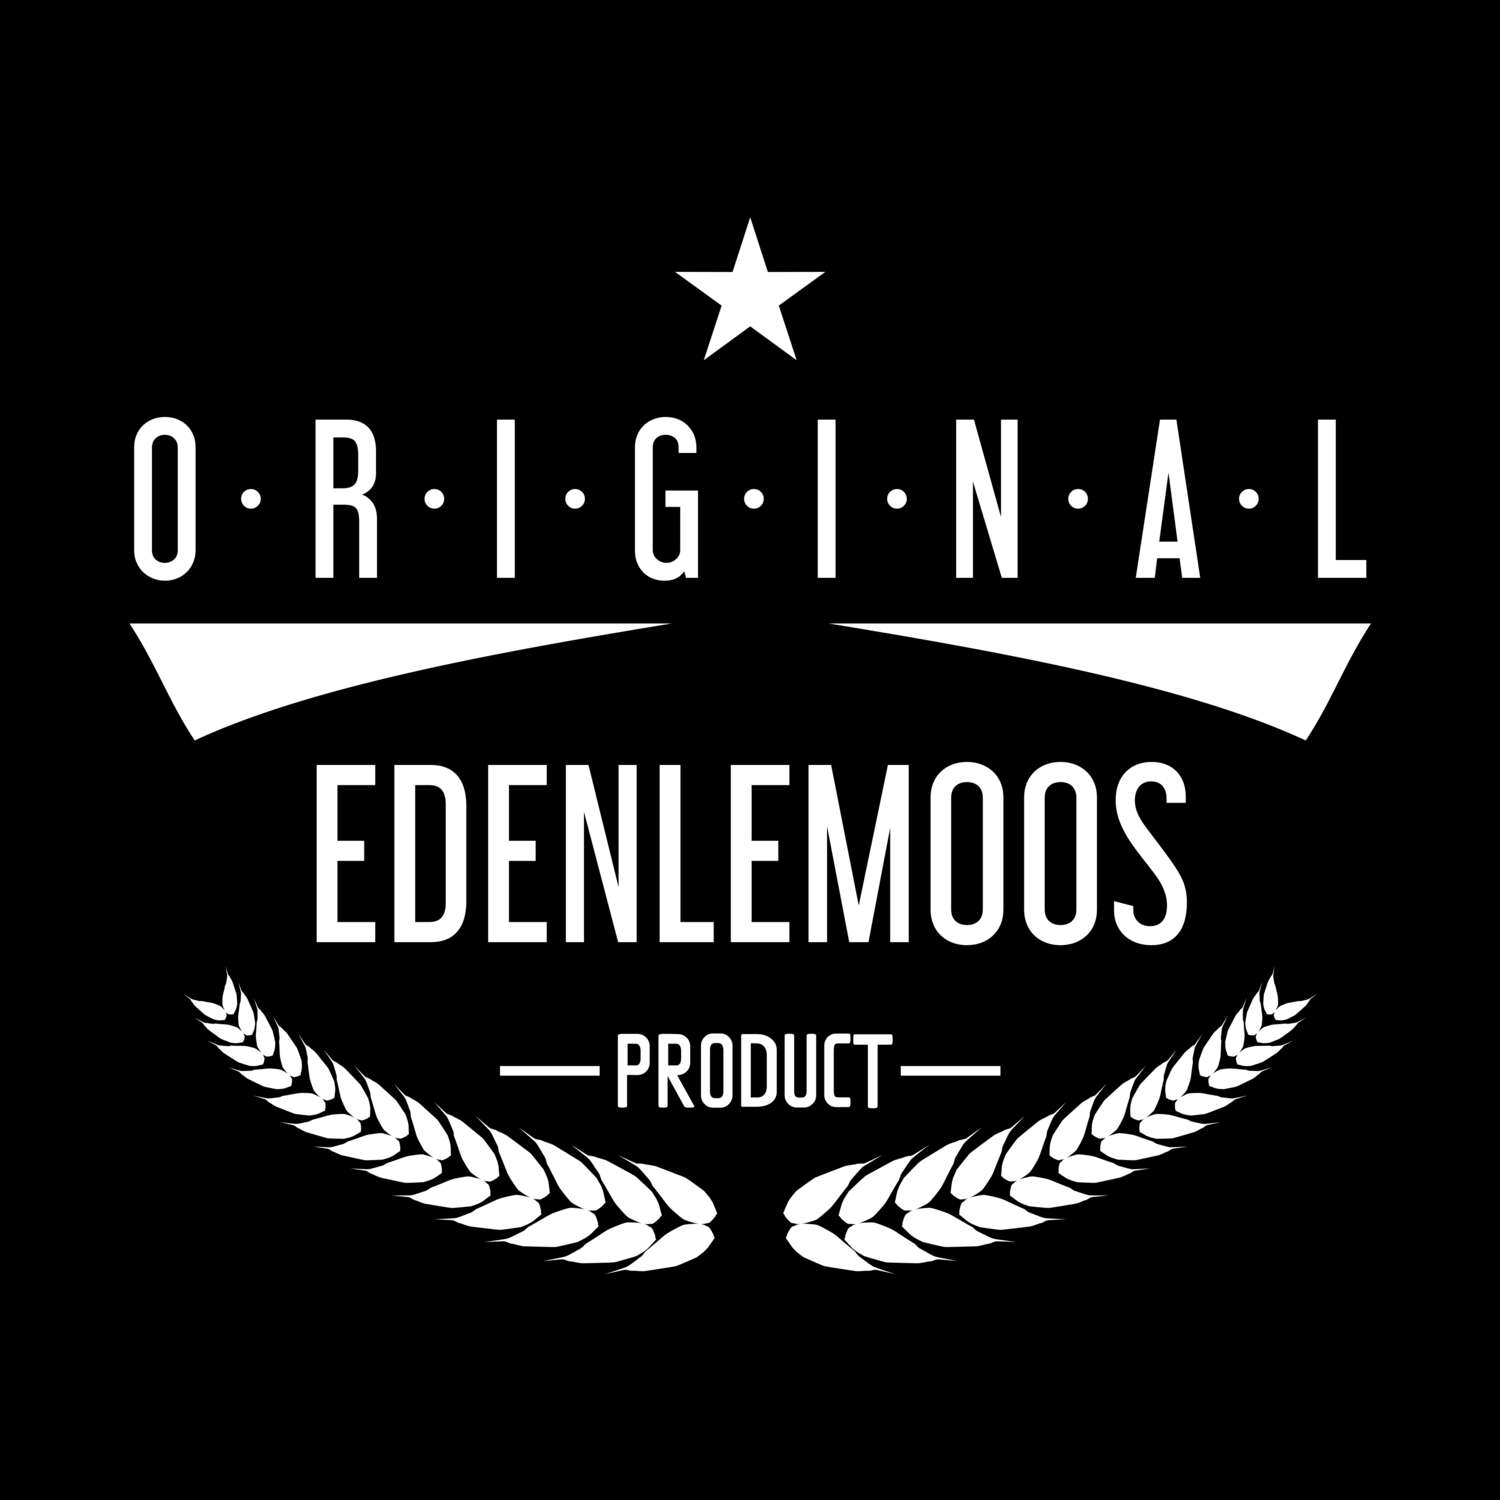 Edenlemoos T-Shirt »Original Product«